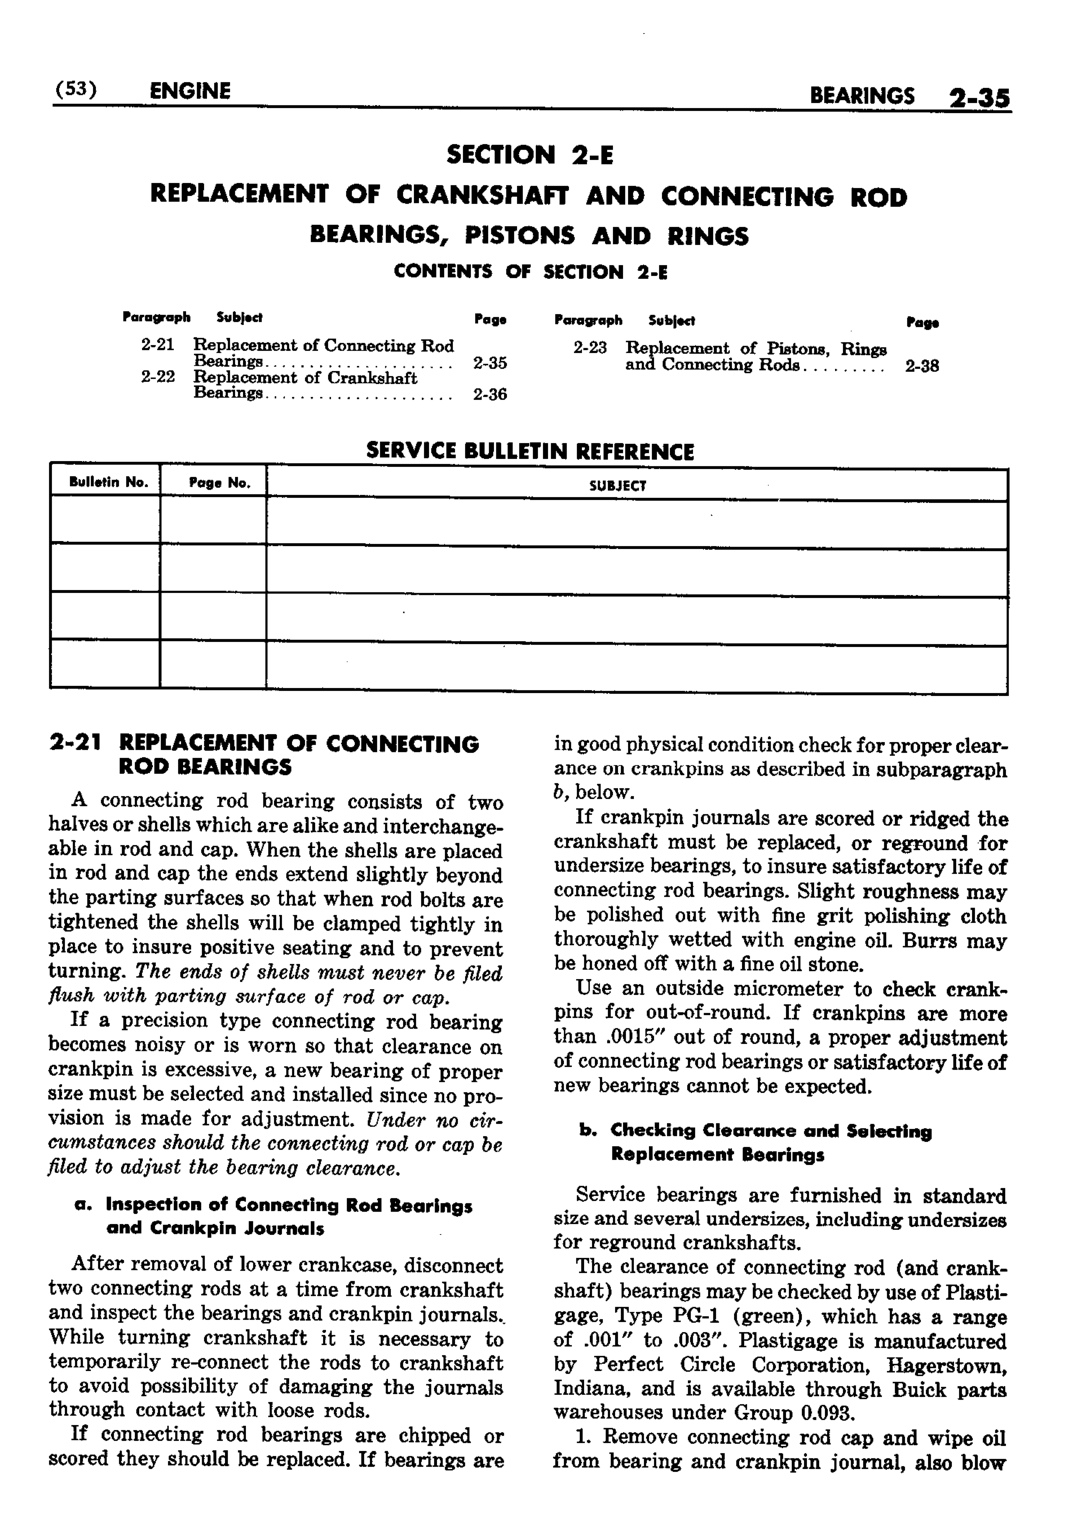 n_03 1952 Buick Shop Manual - Engine-035-035.jpg